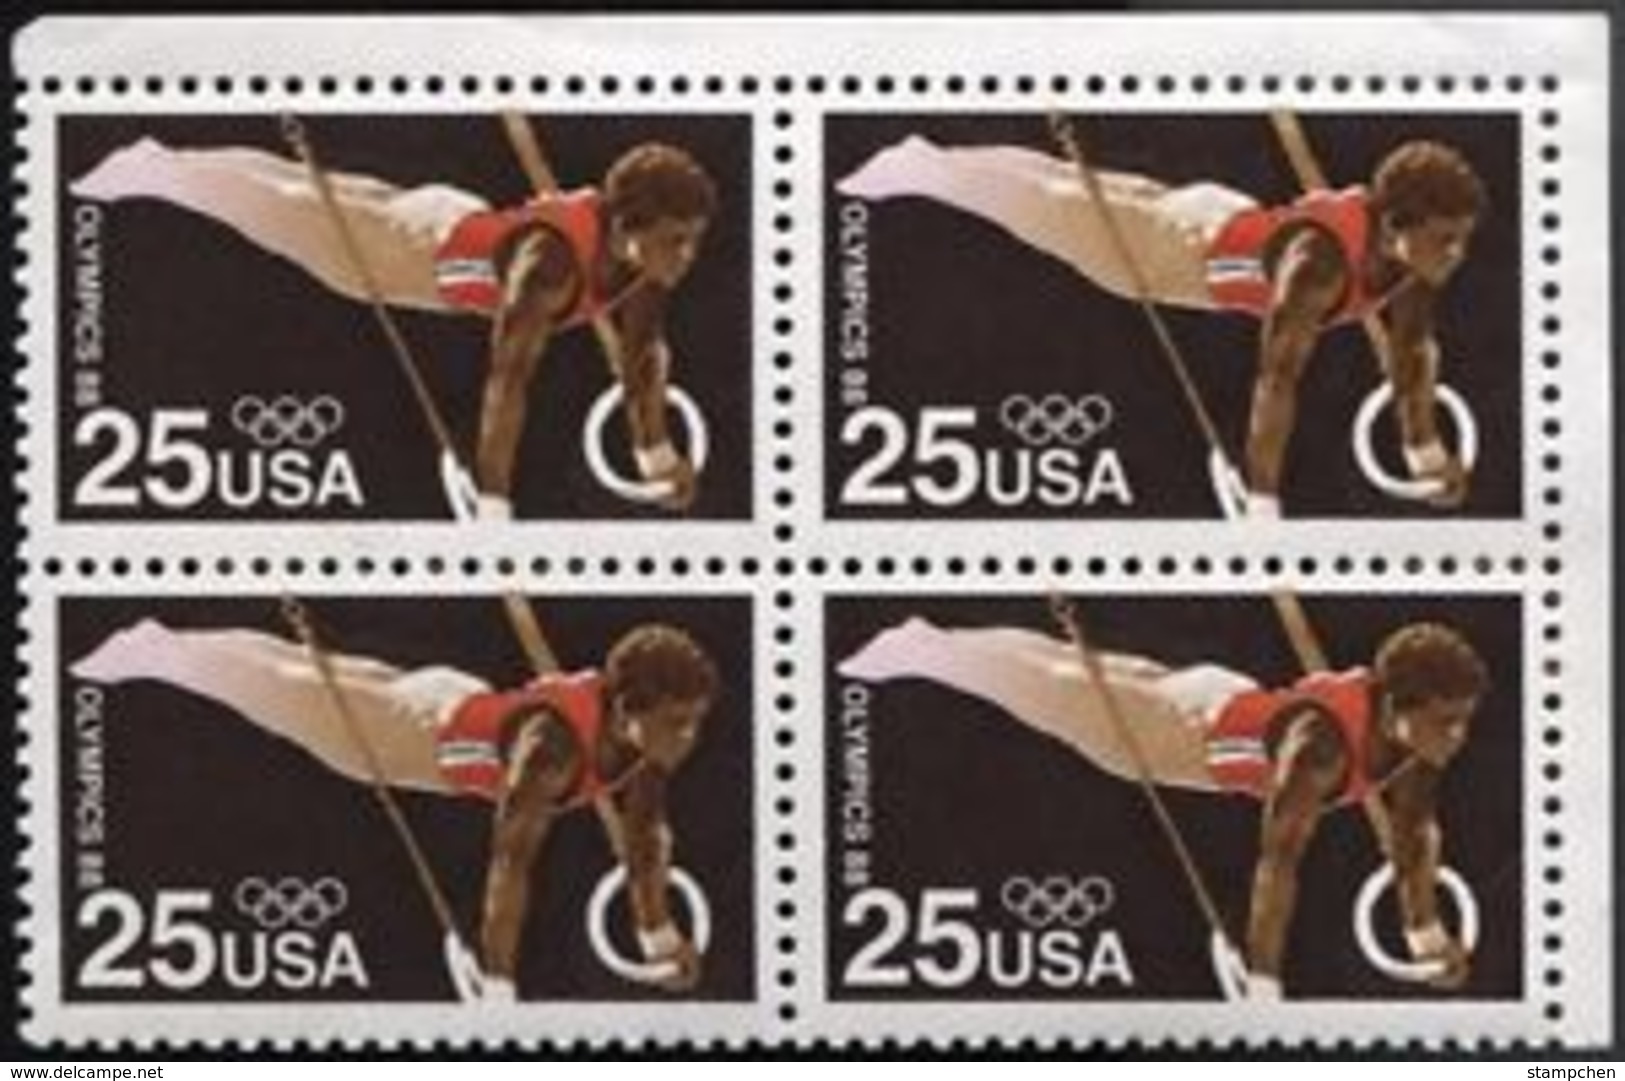 Block 4 Margin -USA 1988 Summer Olympics Games, Seoul, Korea Stamp #2380 Gymnastic Rings - Gymnastics